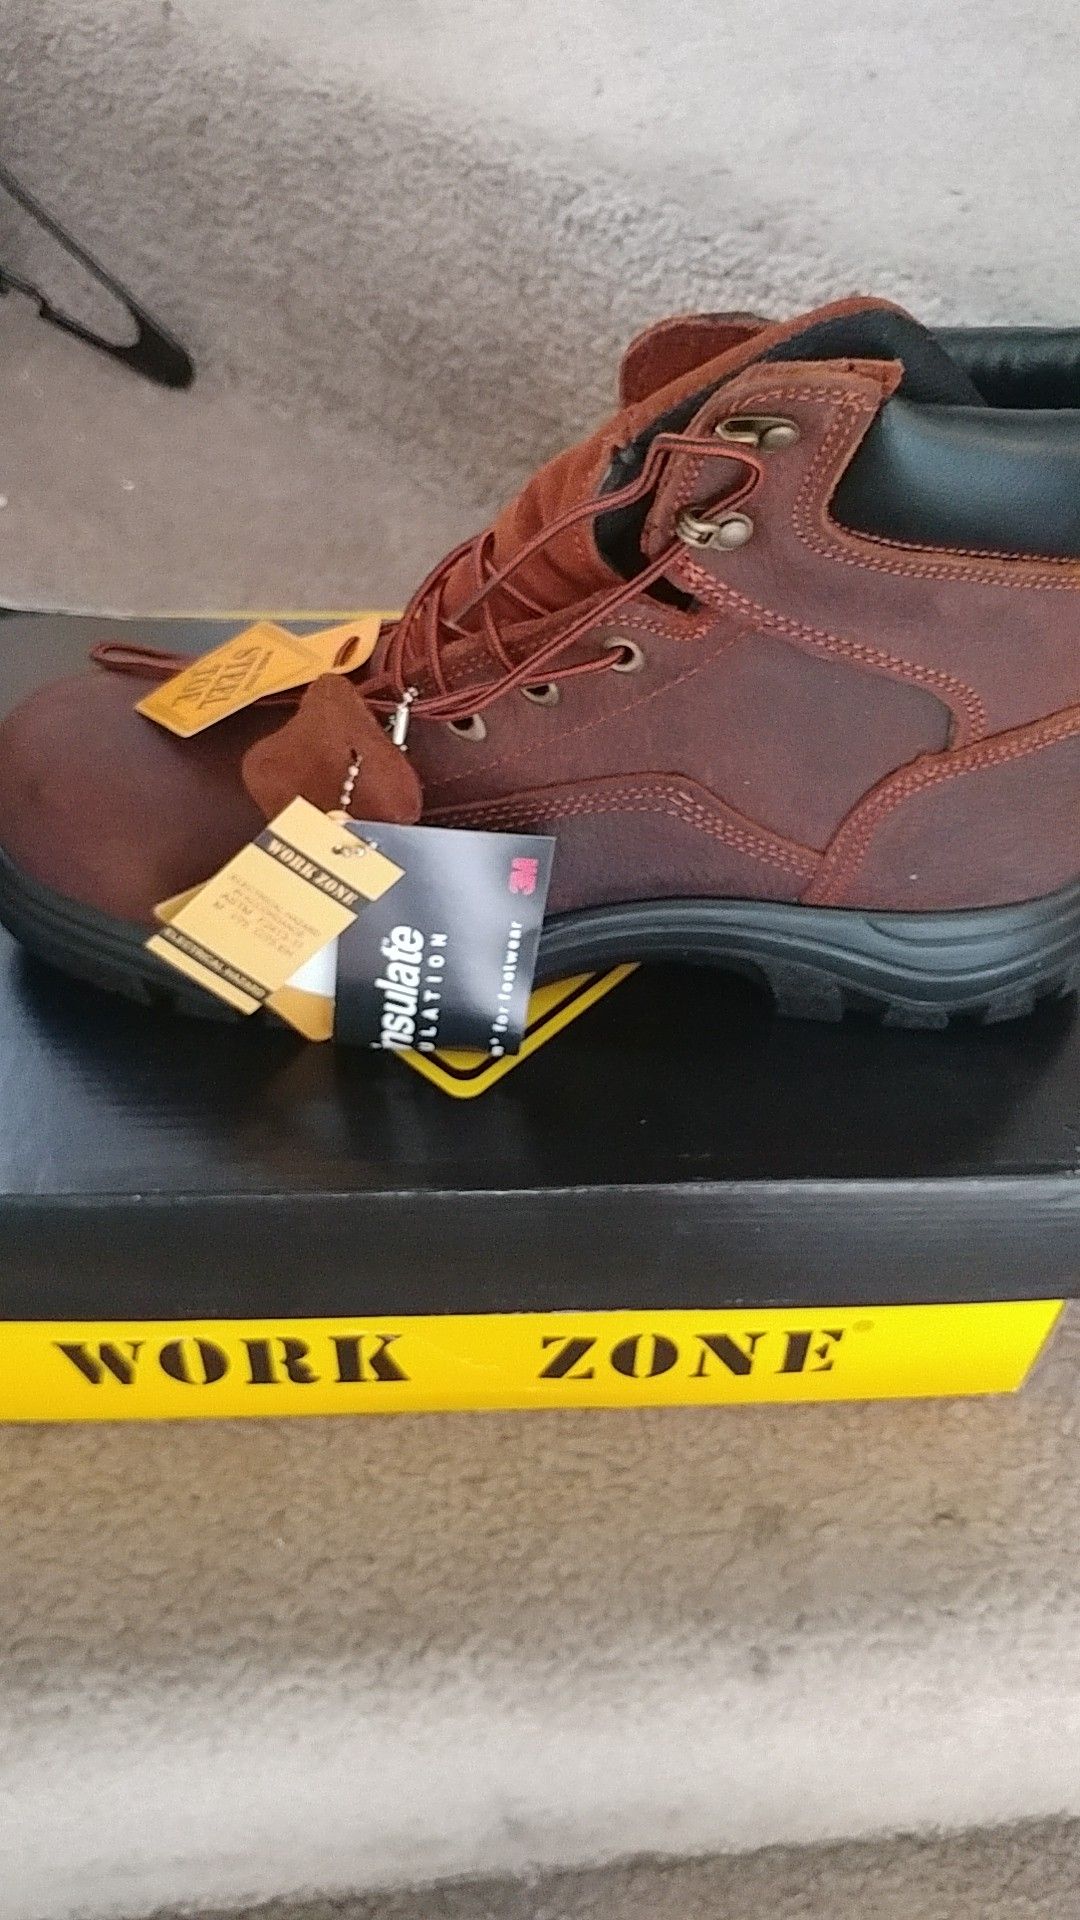 Work zone steel toe work boots